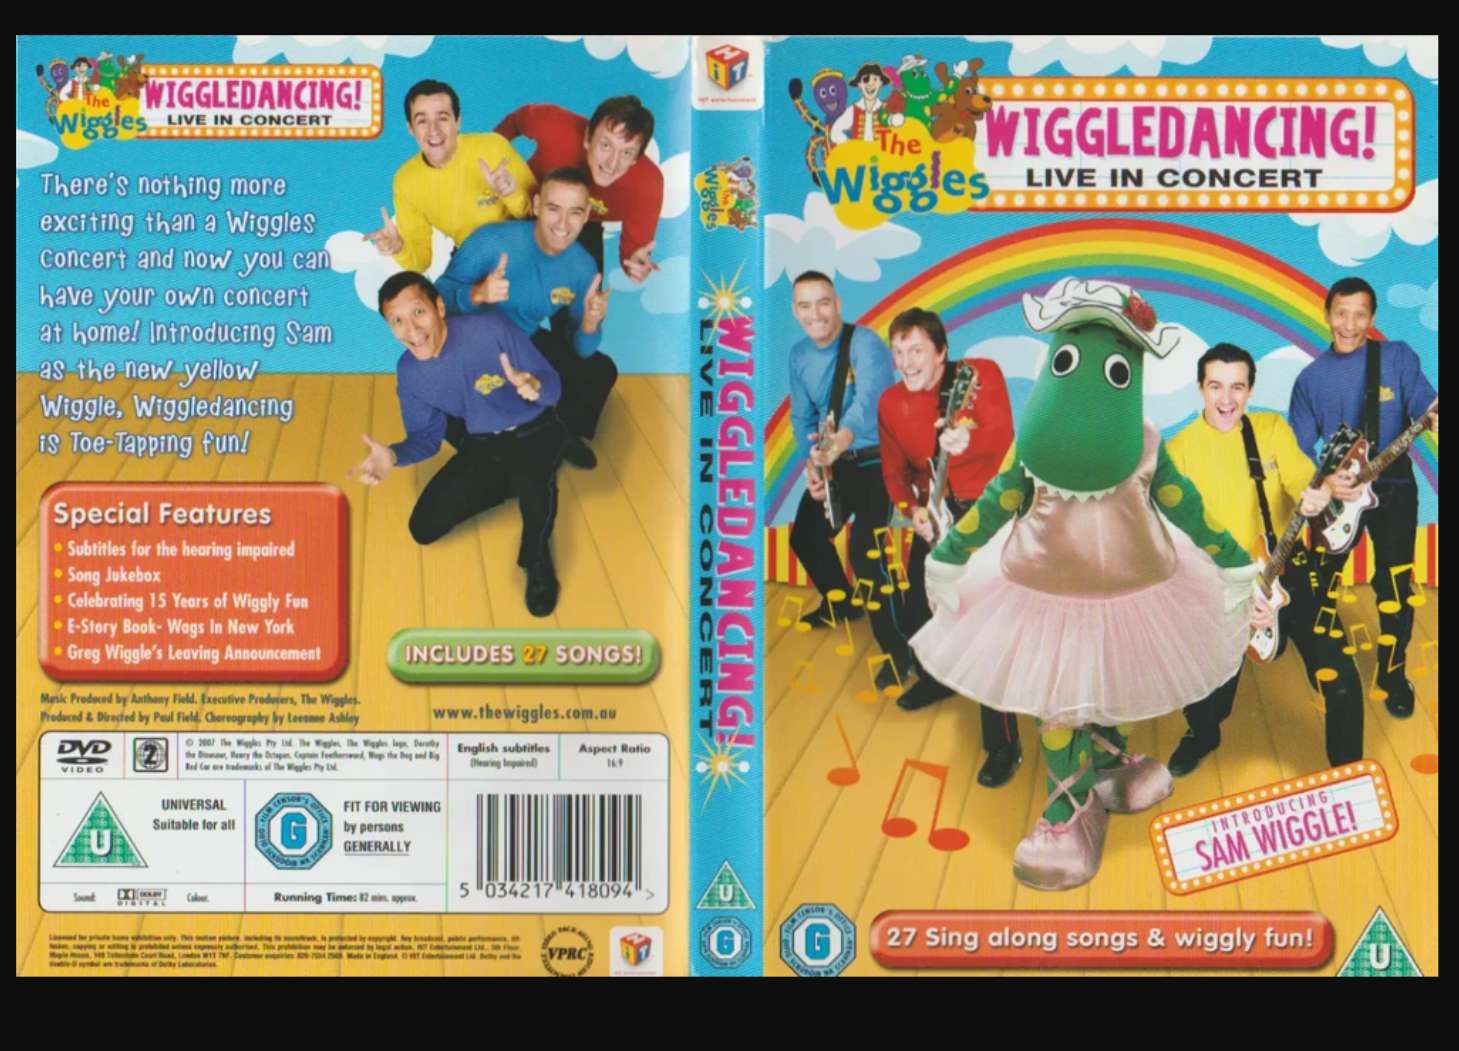 Wiggledancing Live In концертный DVD, 2007 г. пазл онлайн